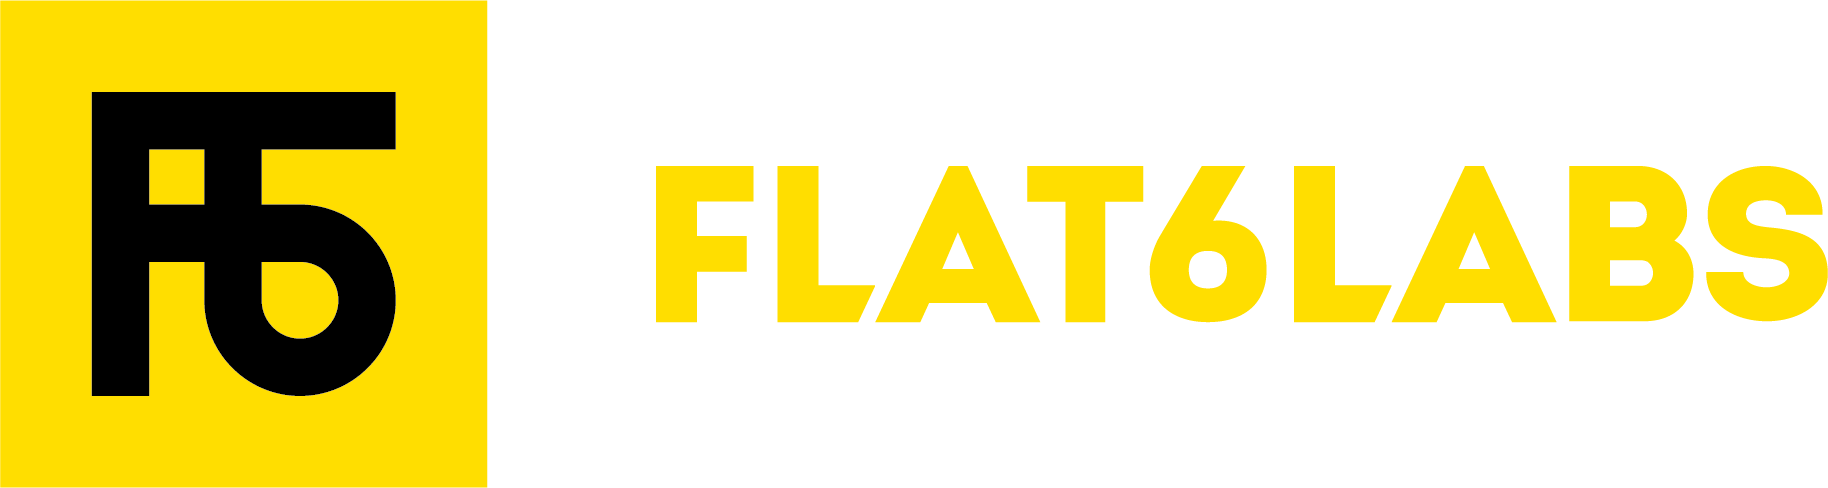 Partnering Entities - Flat6Labs 